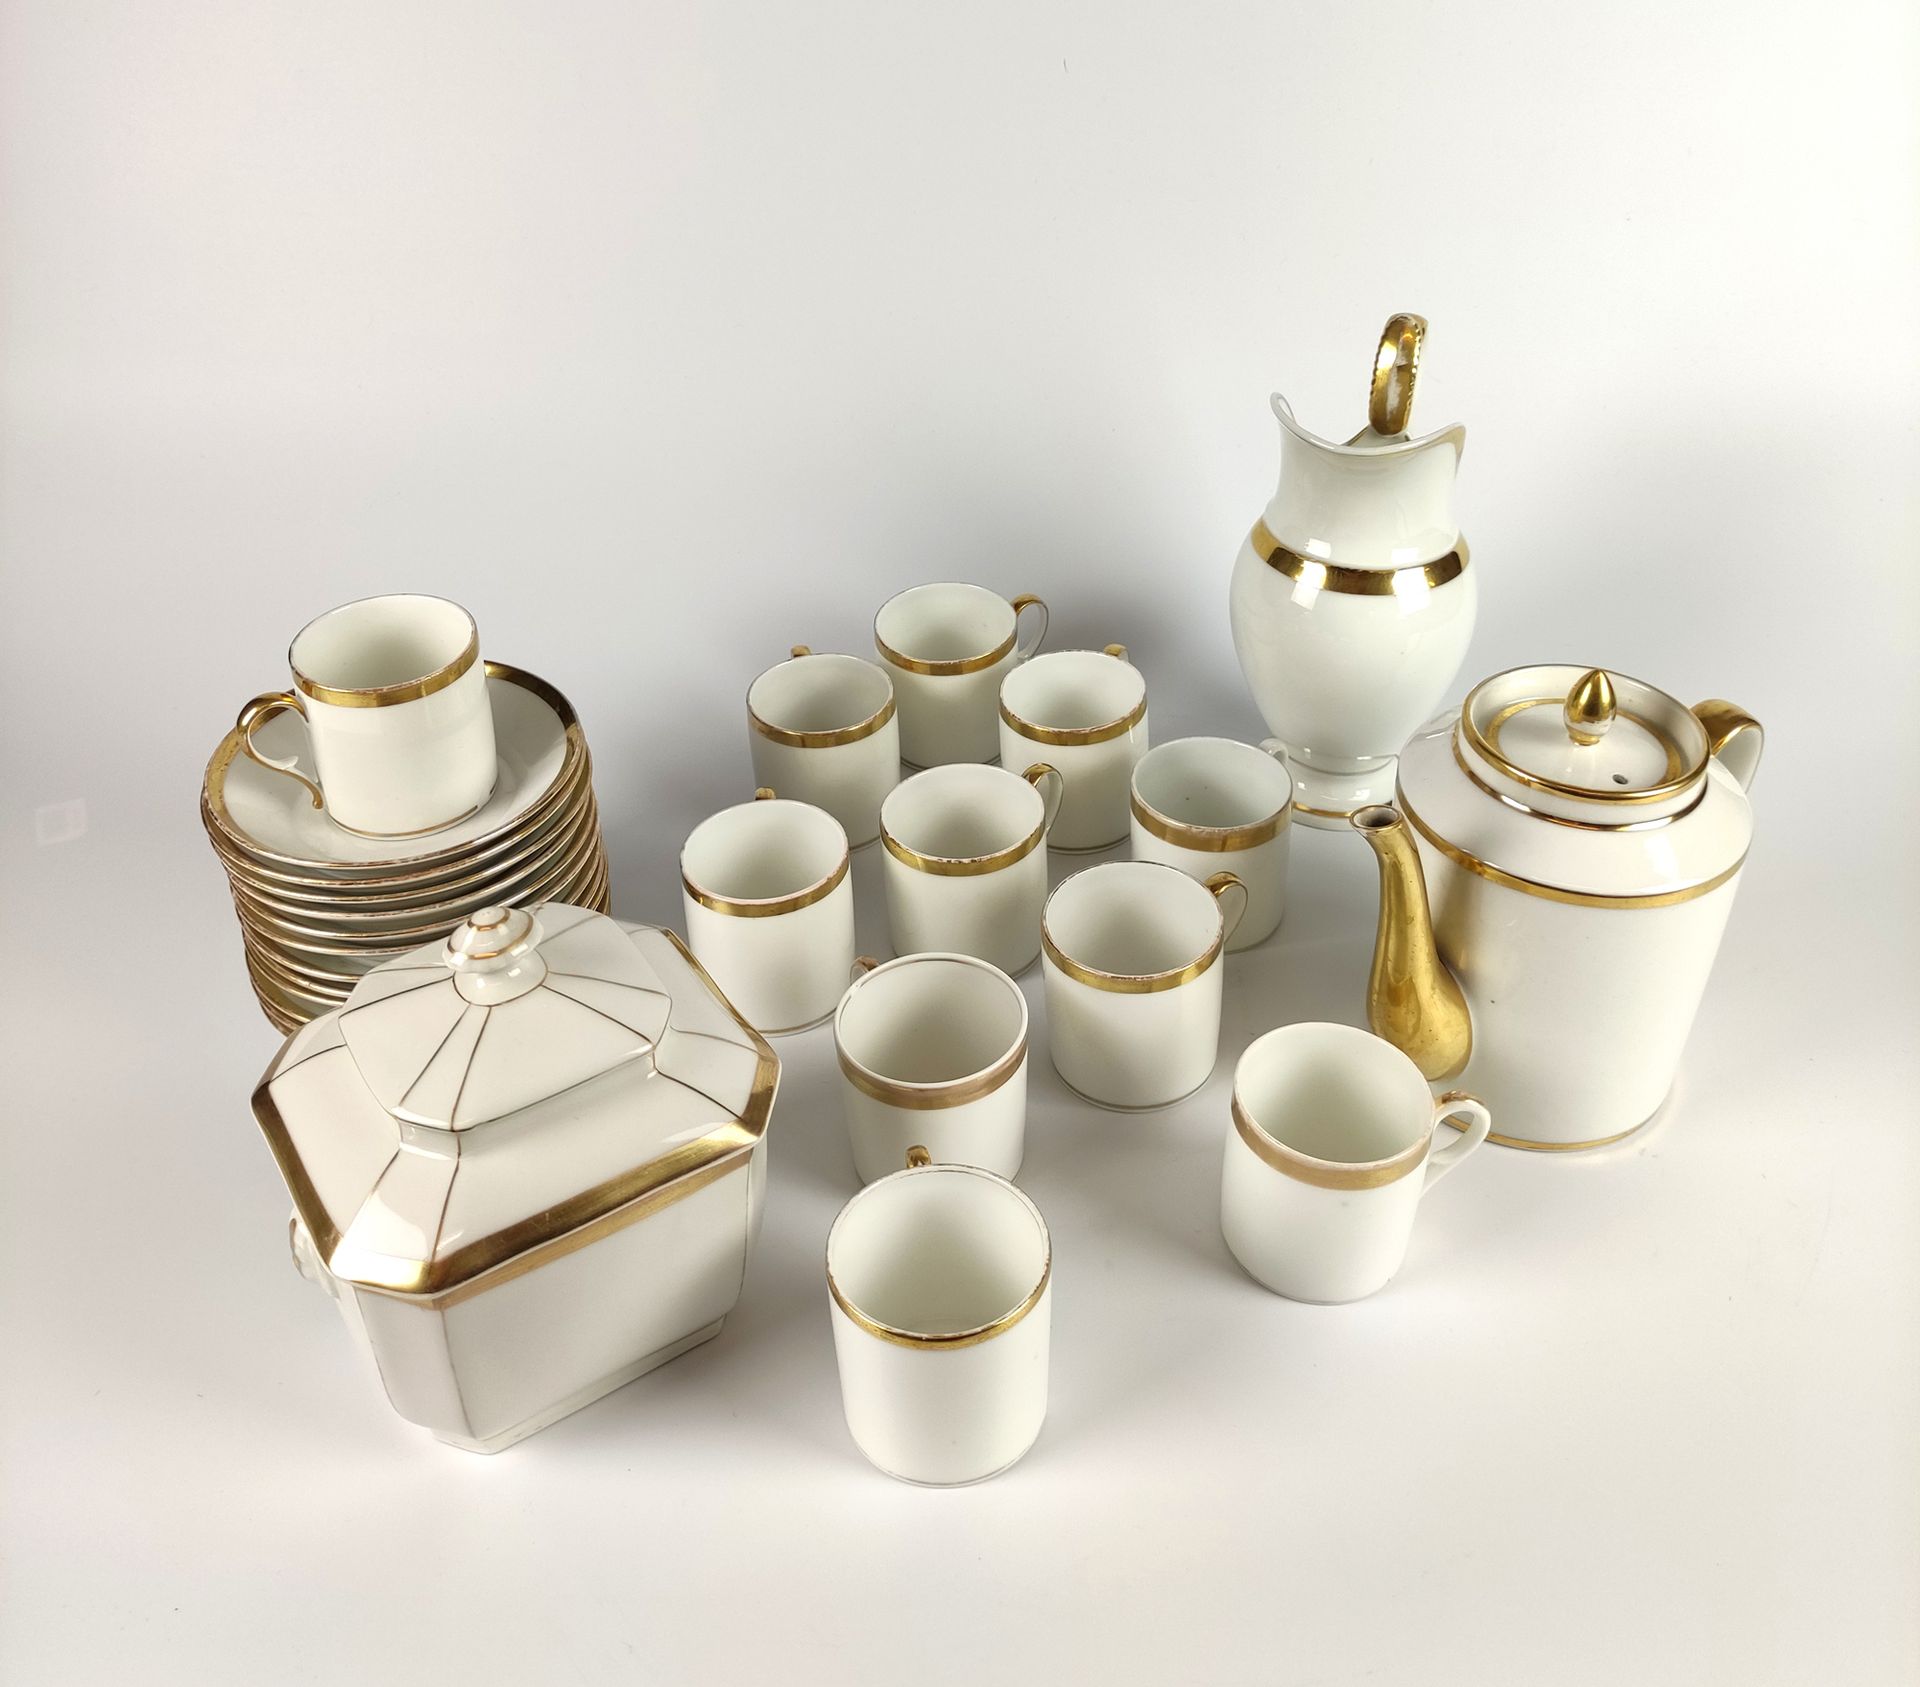 Null 巴黎茶具，白色和金色的瓷器，包括。- 一个茶壶 - 一个糖碗 - 一个牛奶壶 - 11个杯子 - 12个碟子 19世纪（有缺口和划痕